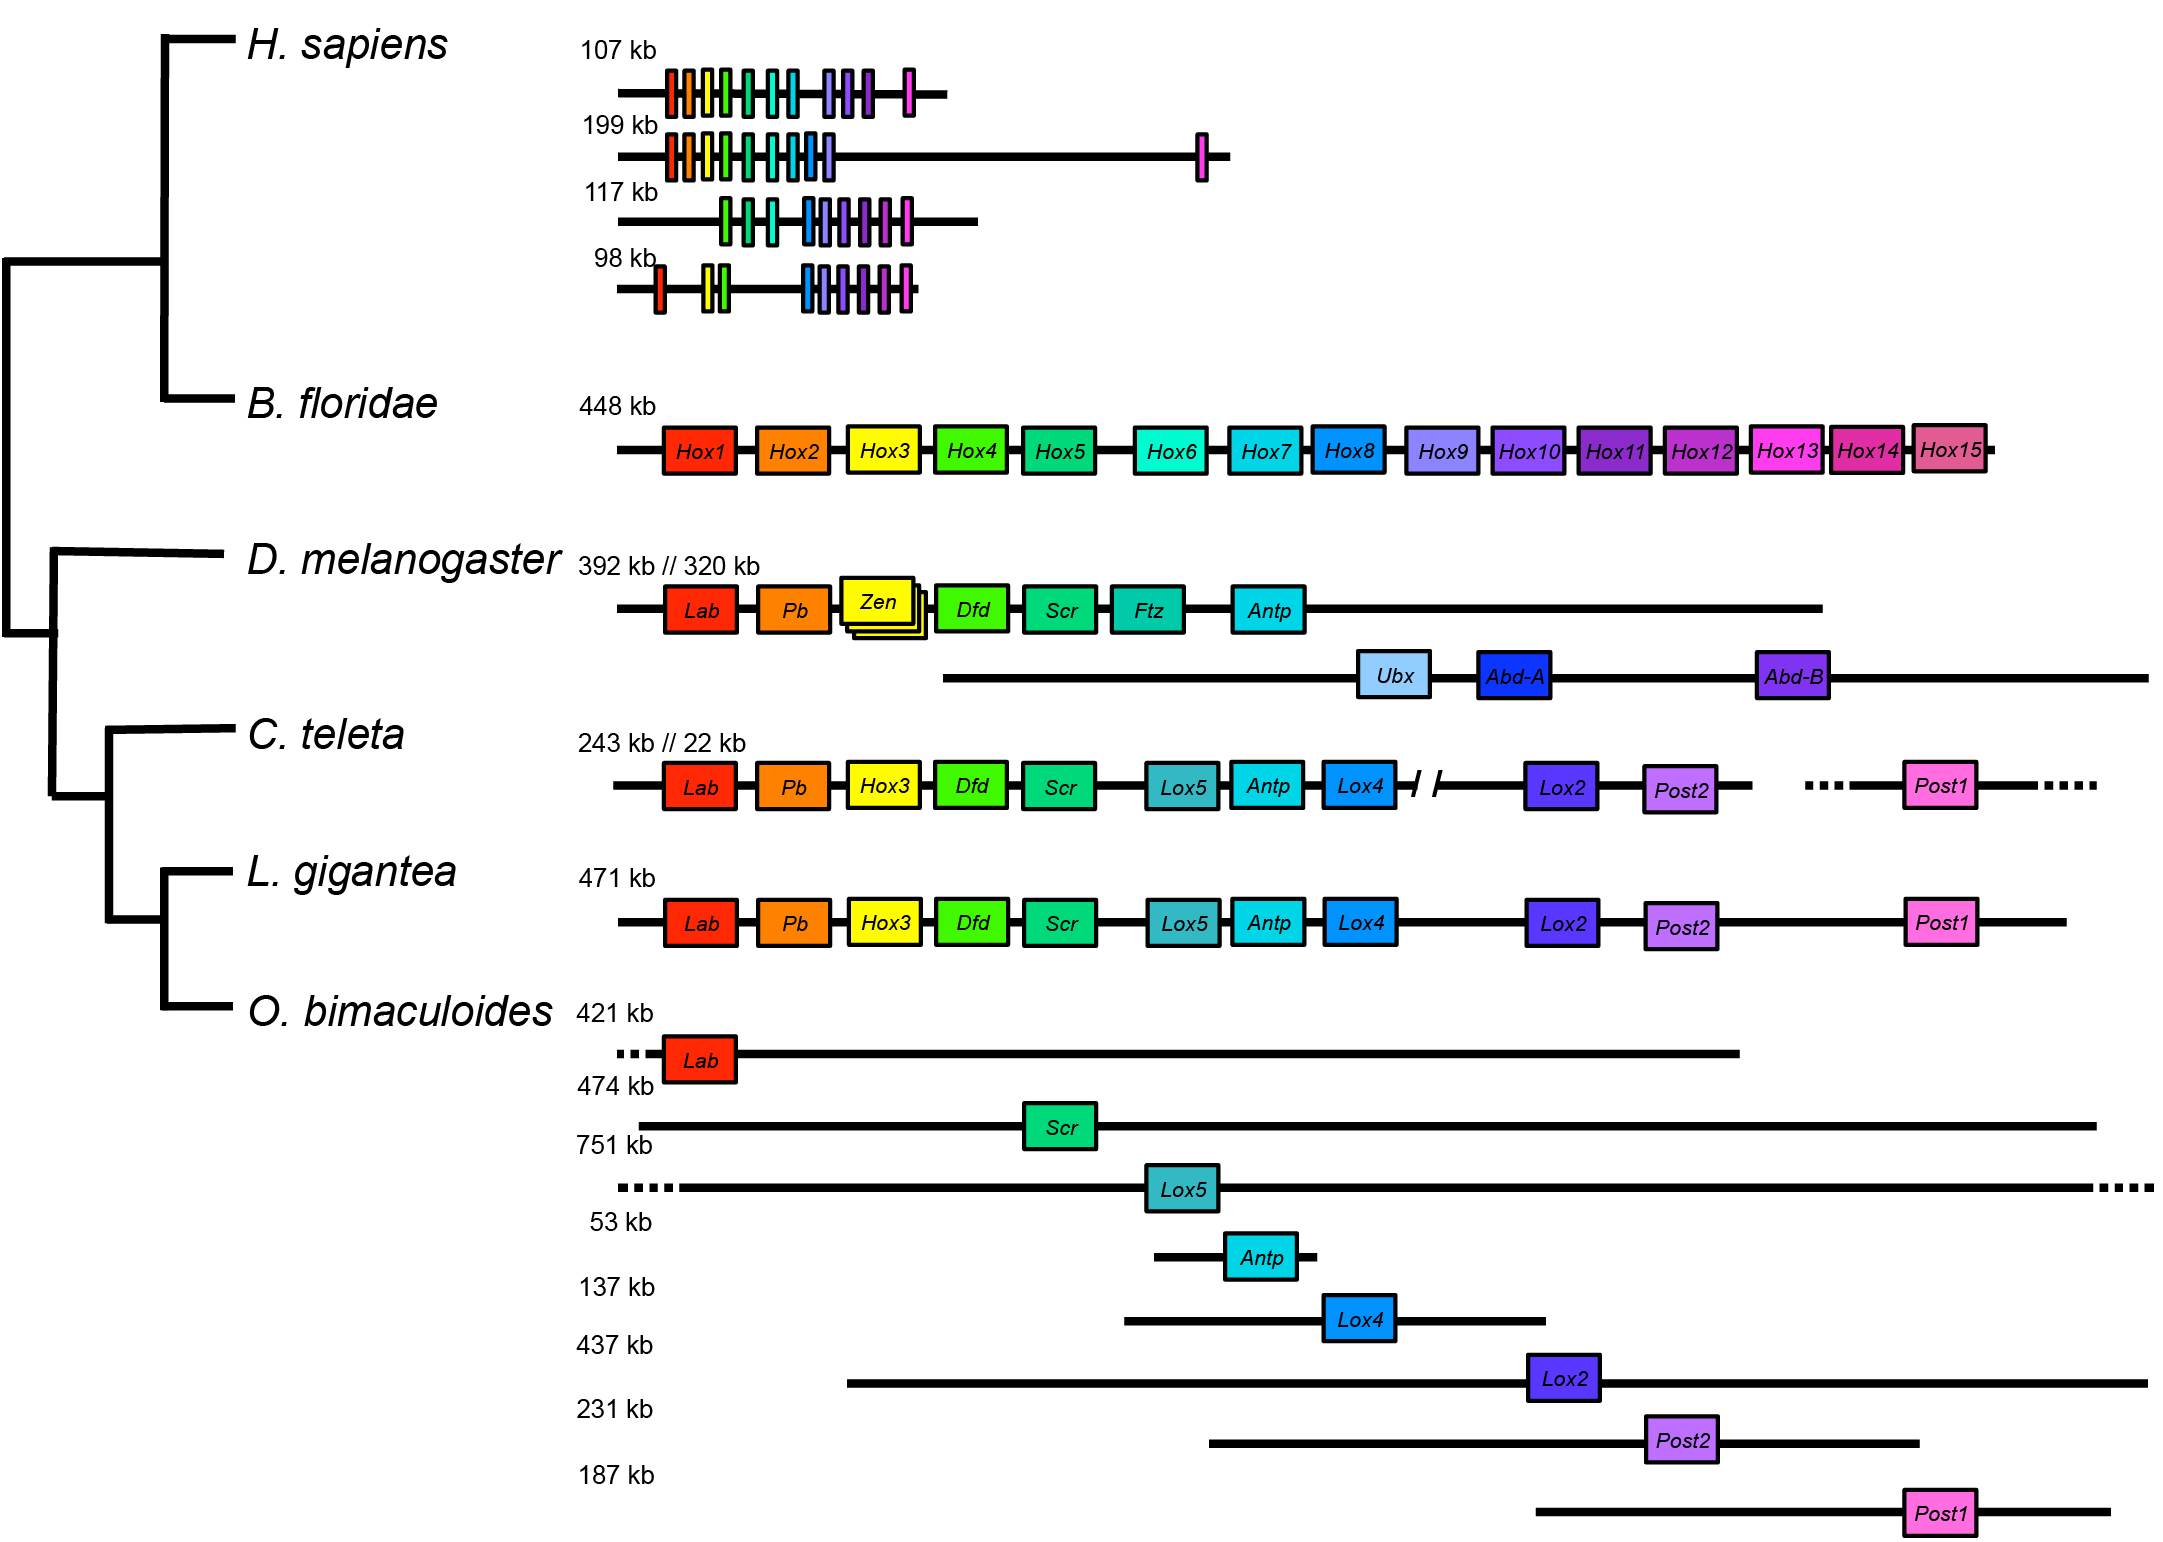 Distribution of Hox genes in chromosomes of different vertebrates and invertebrates